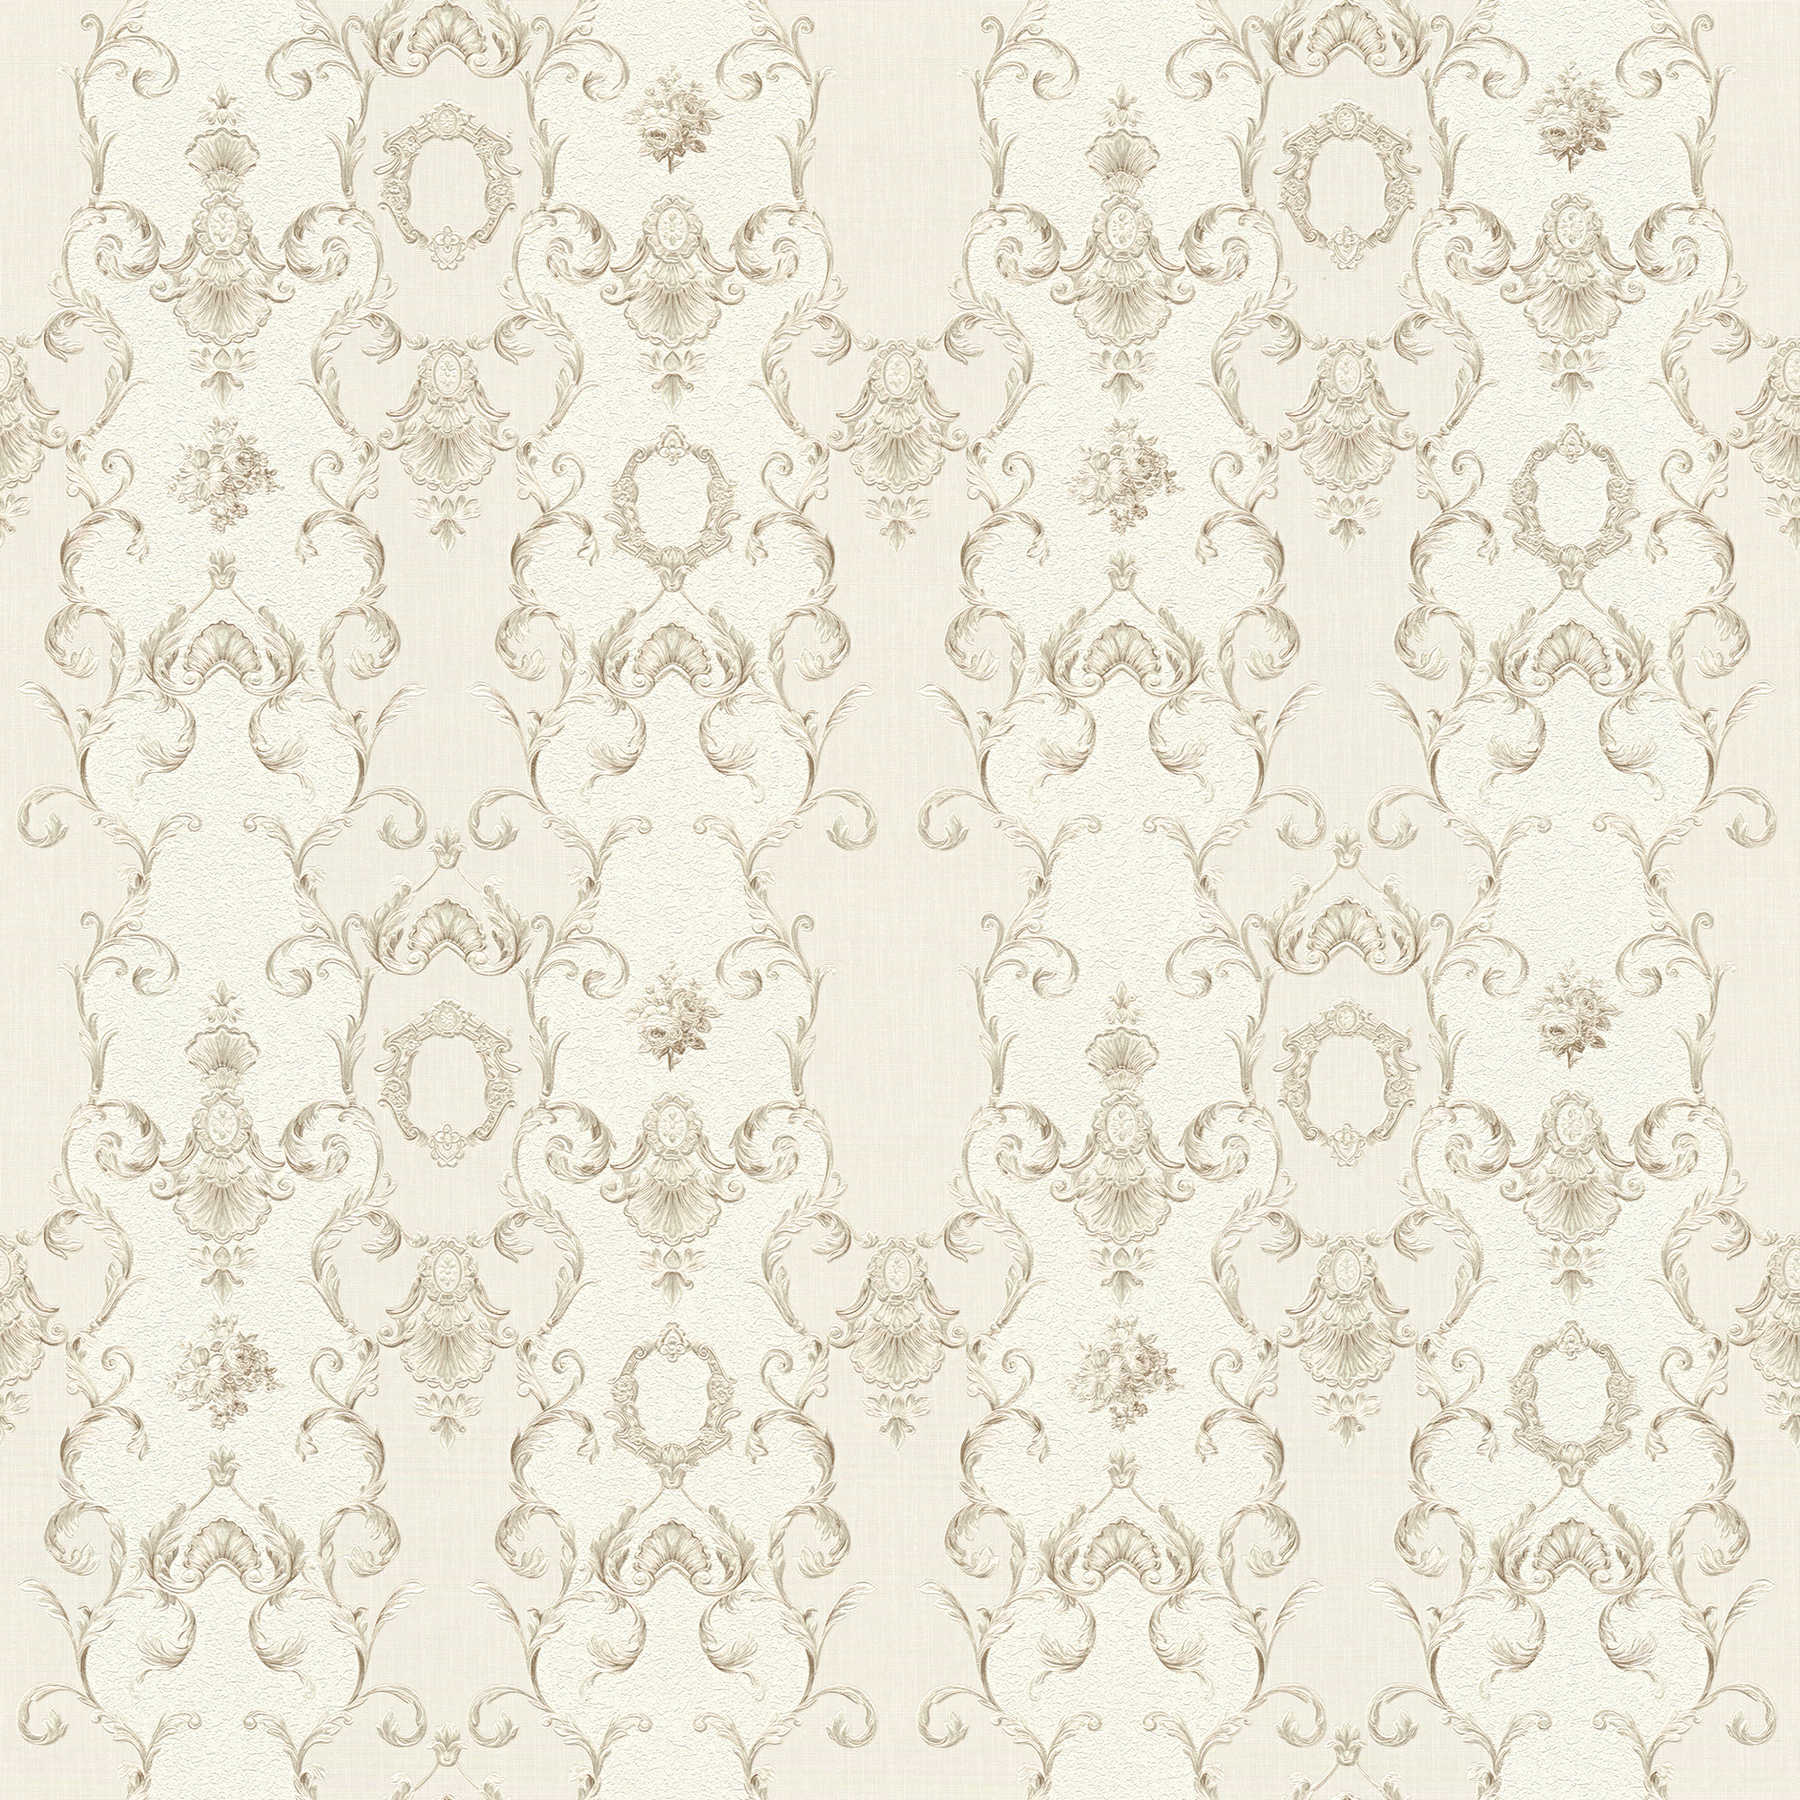         Neo-barok vliesbehang met metallic decor - crème, metallic
    